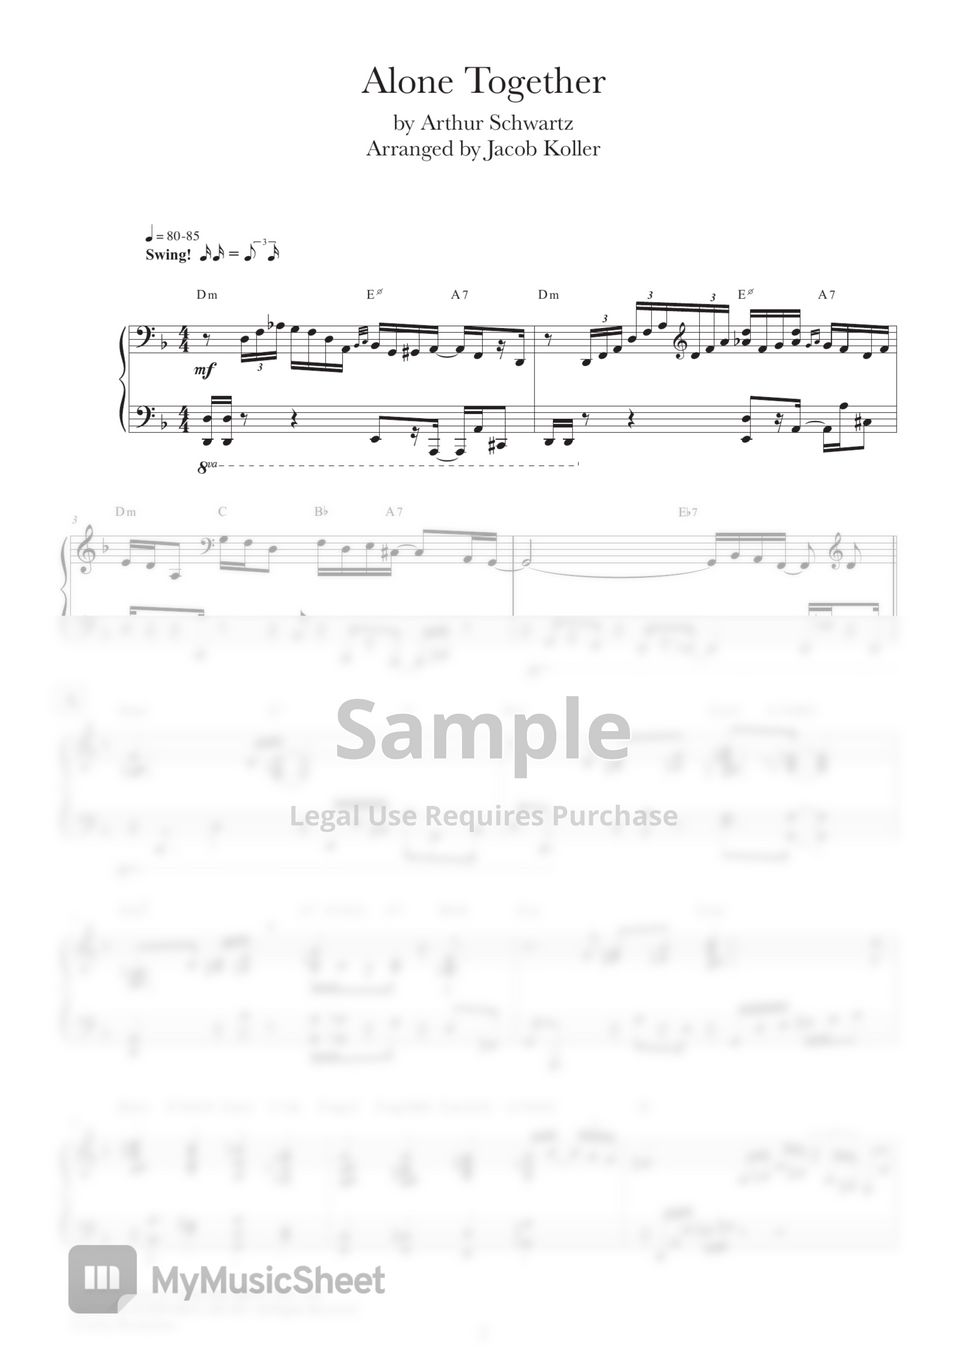 Chet Baker - Alone Together (Solo Piano Jazz Arrangement/Improvisation) by Jacob Koller